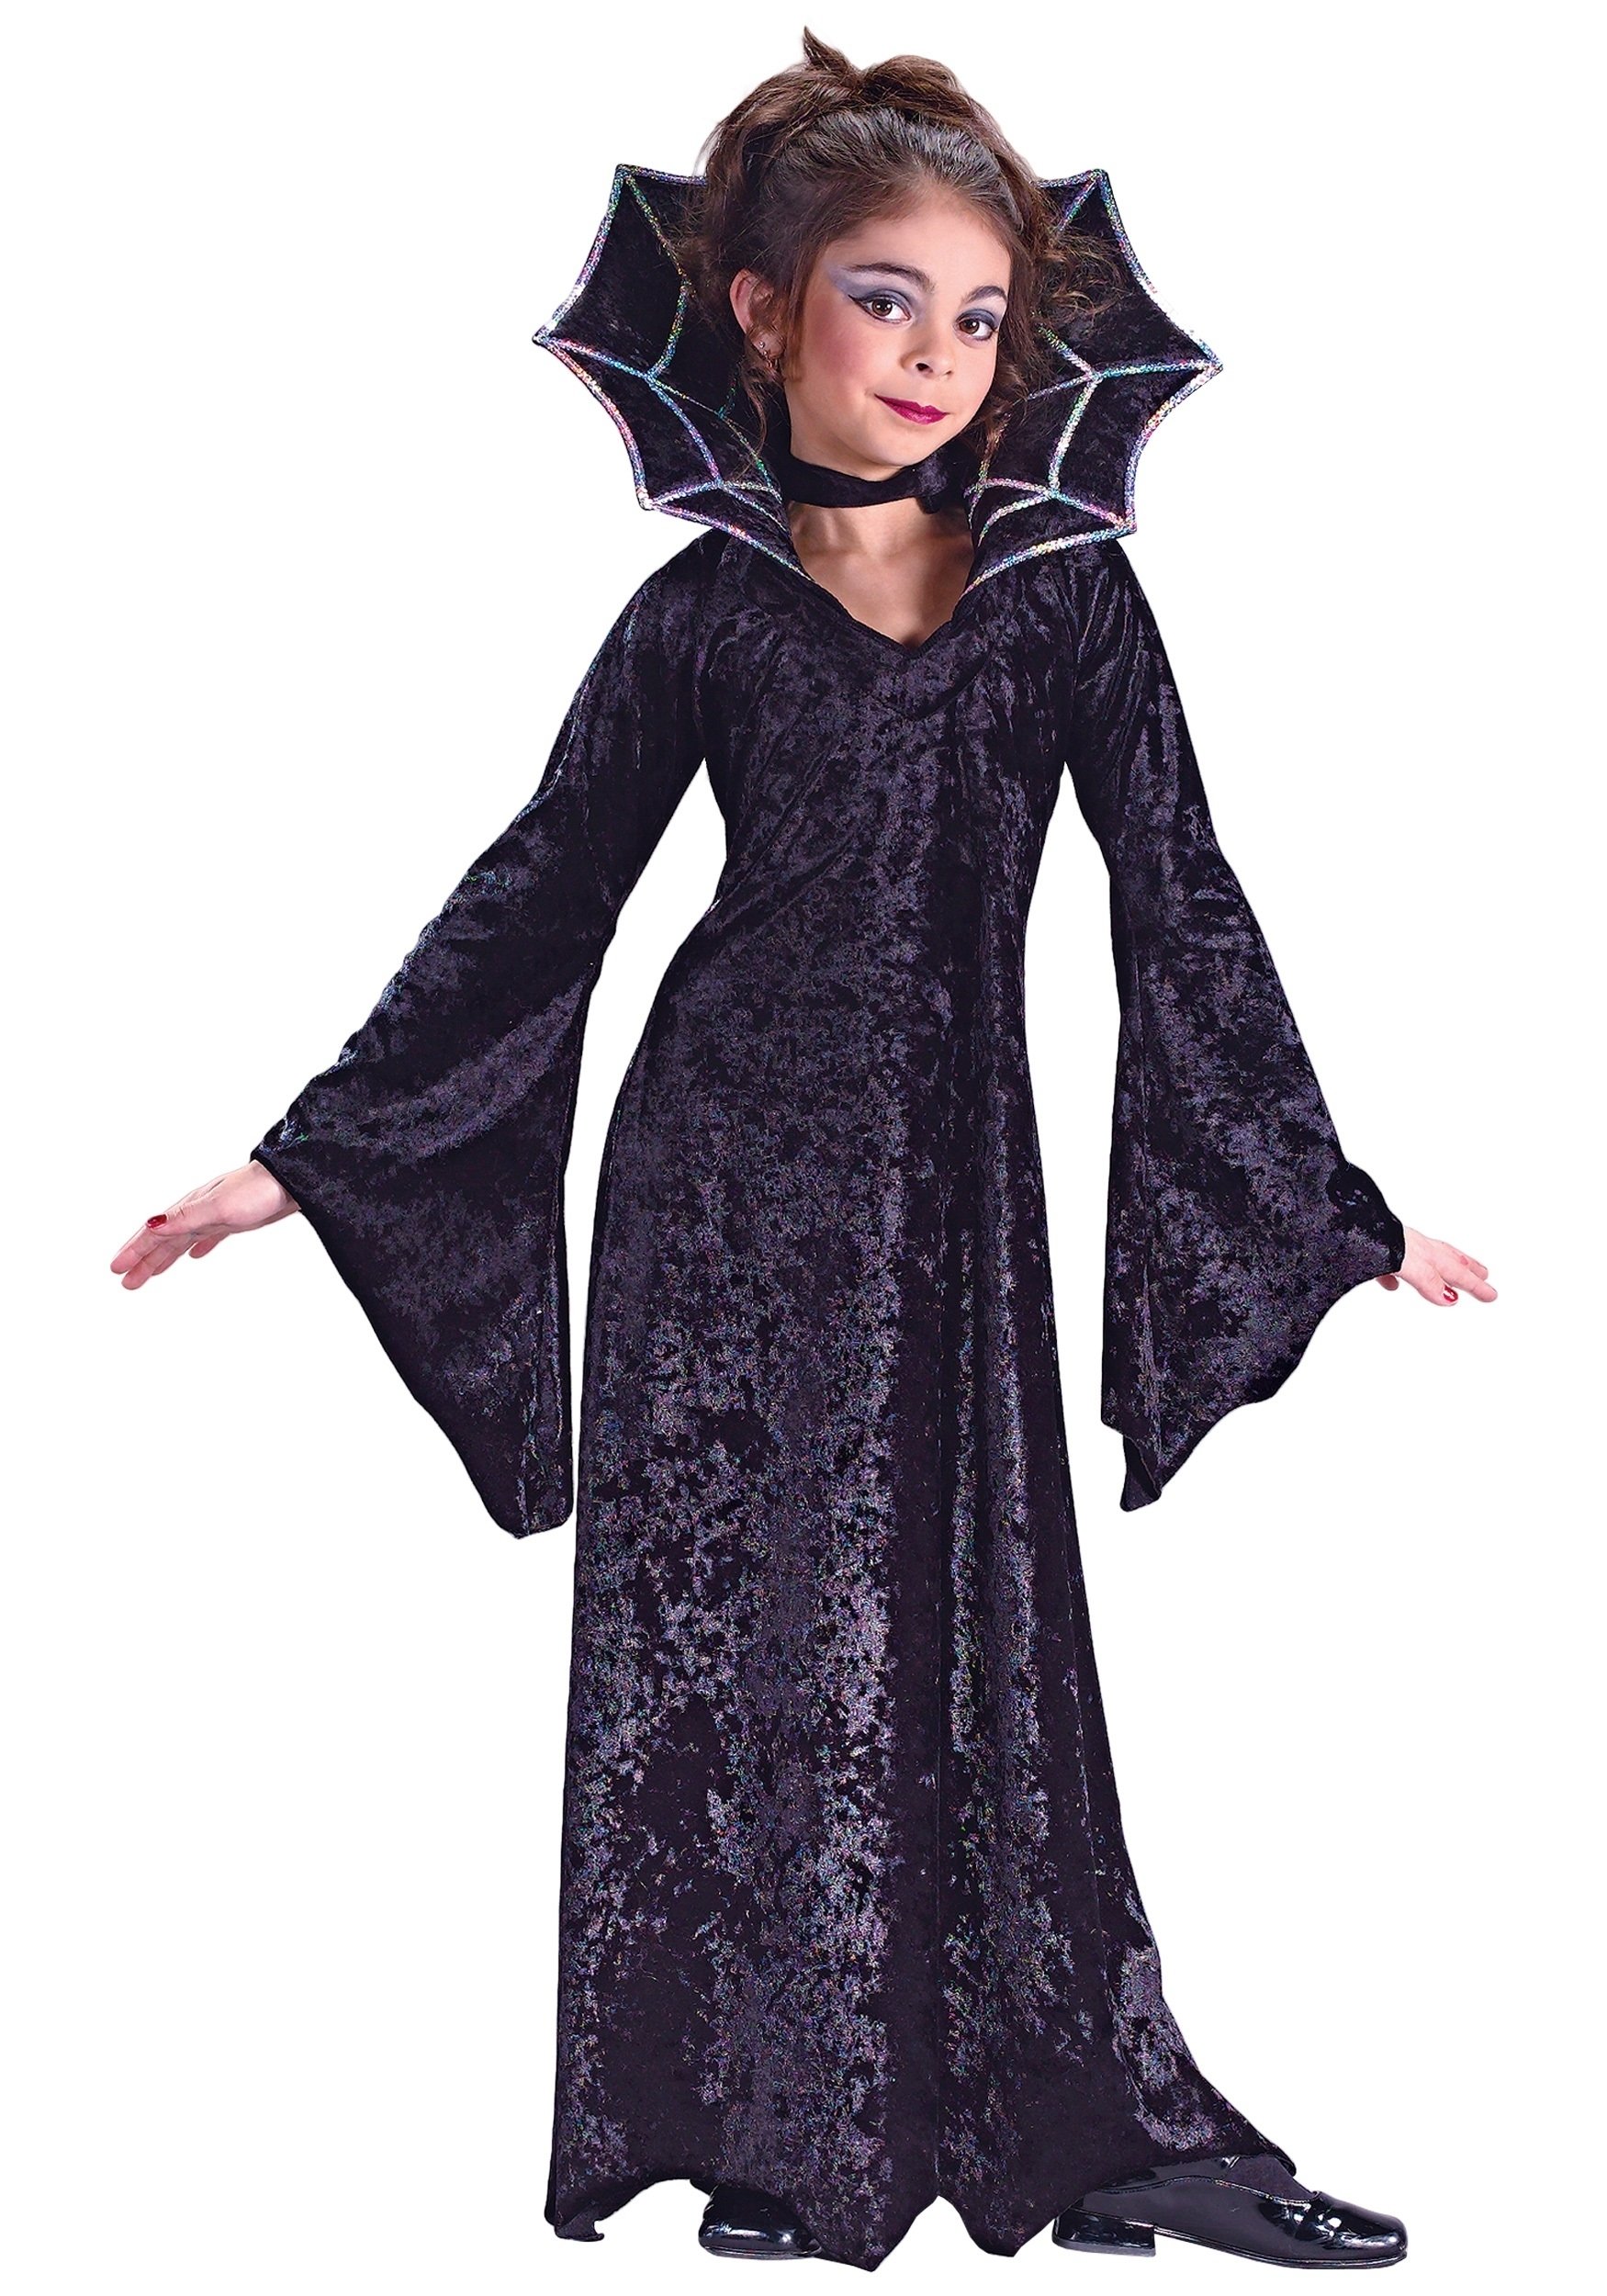 10 Great Halloween Costumes Ideas For Boys child spiderella costume 2 2022